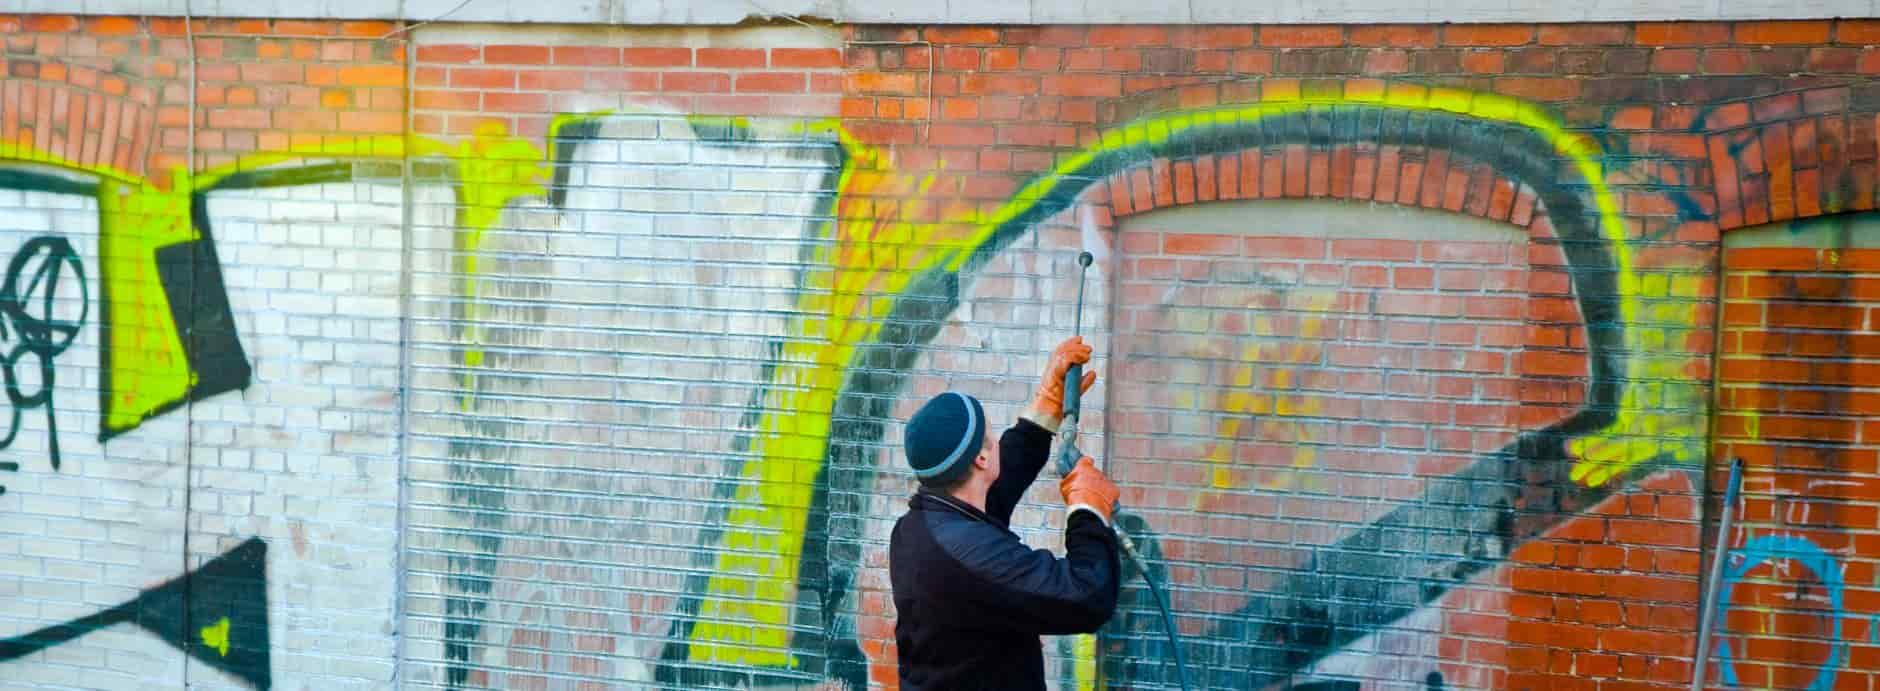 Graffiti Removal in Catterick